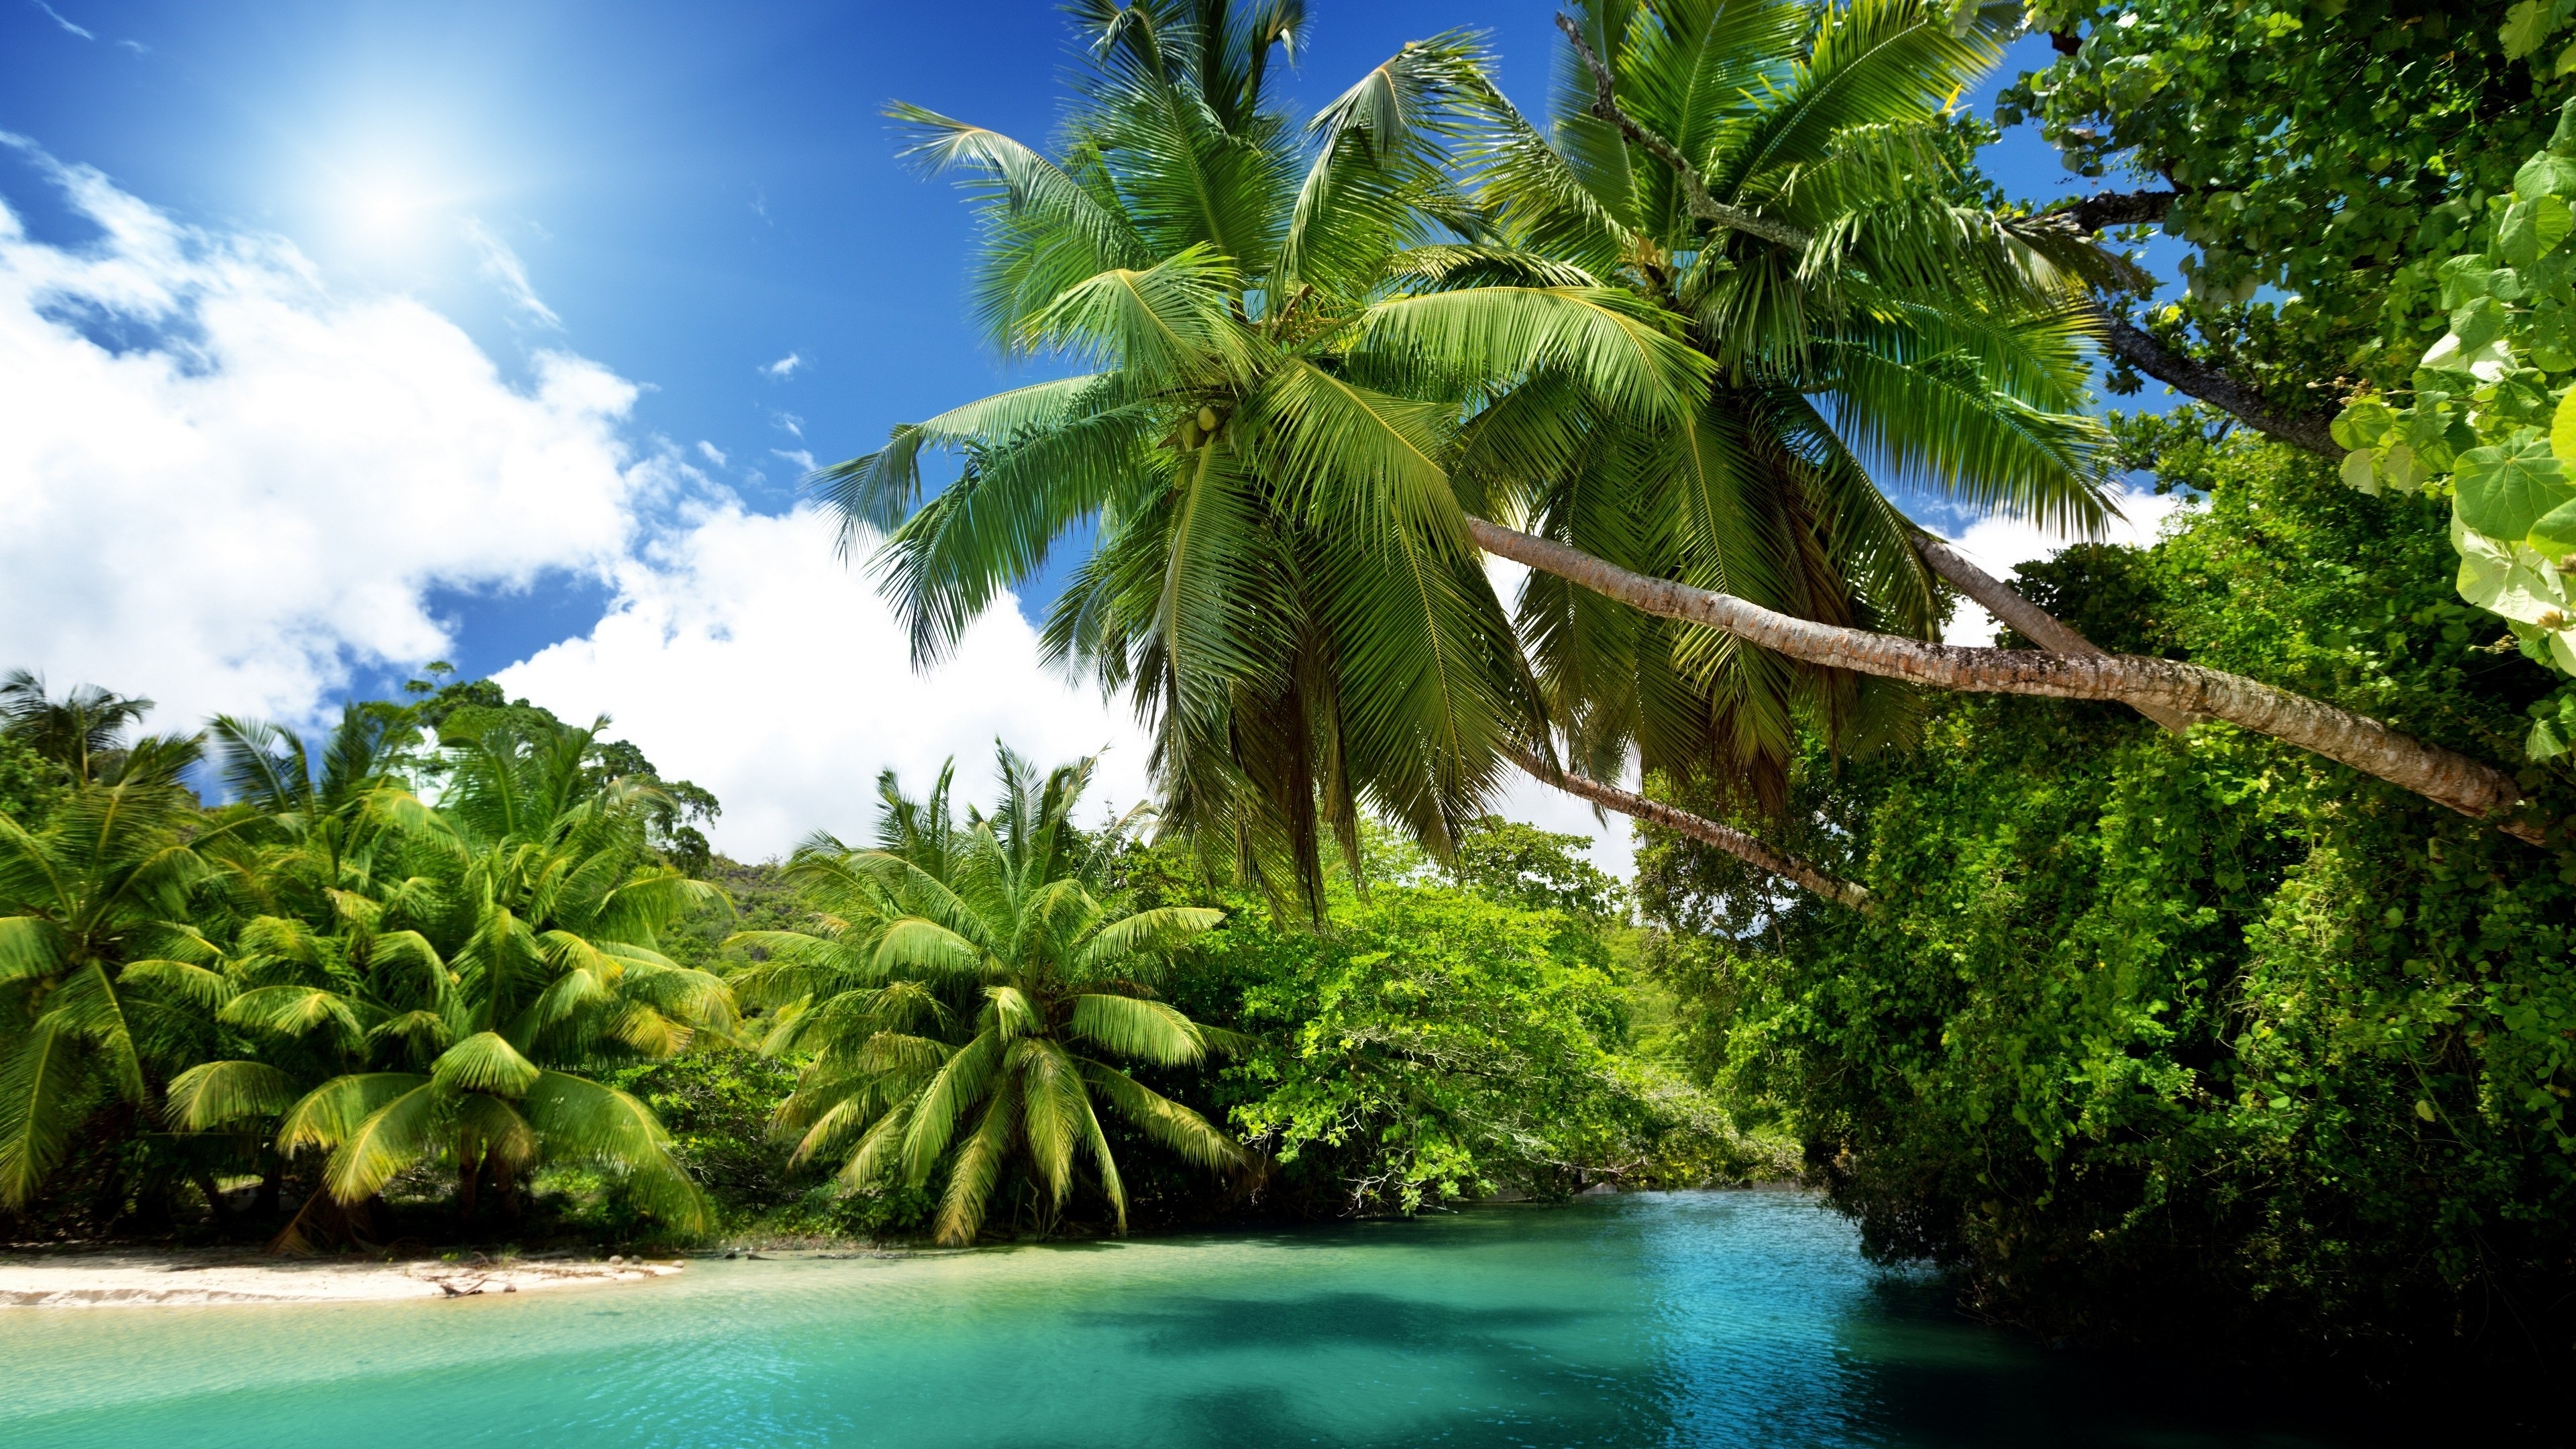 648621 descargar imagen palmera, laguna, tierra/naturaleza, tropico, zona tropical: fondos de pantalla y protectores de pantalla gratis